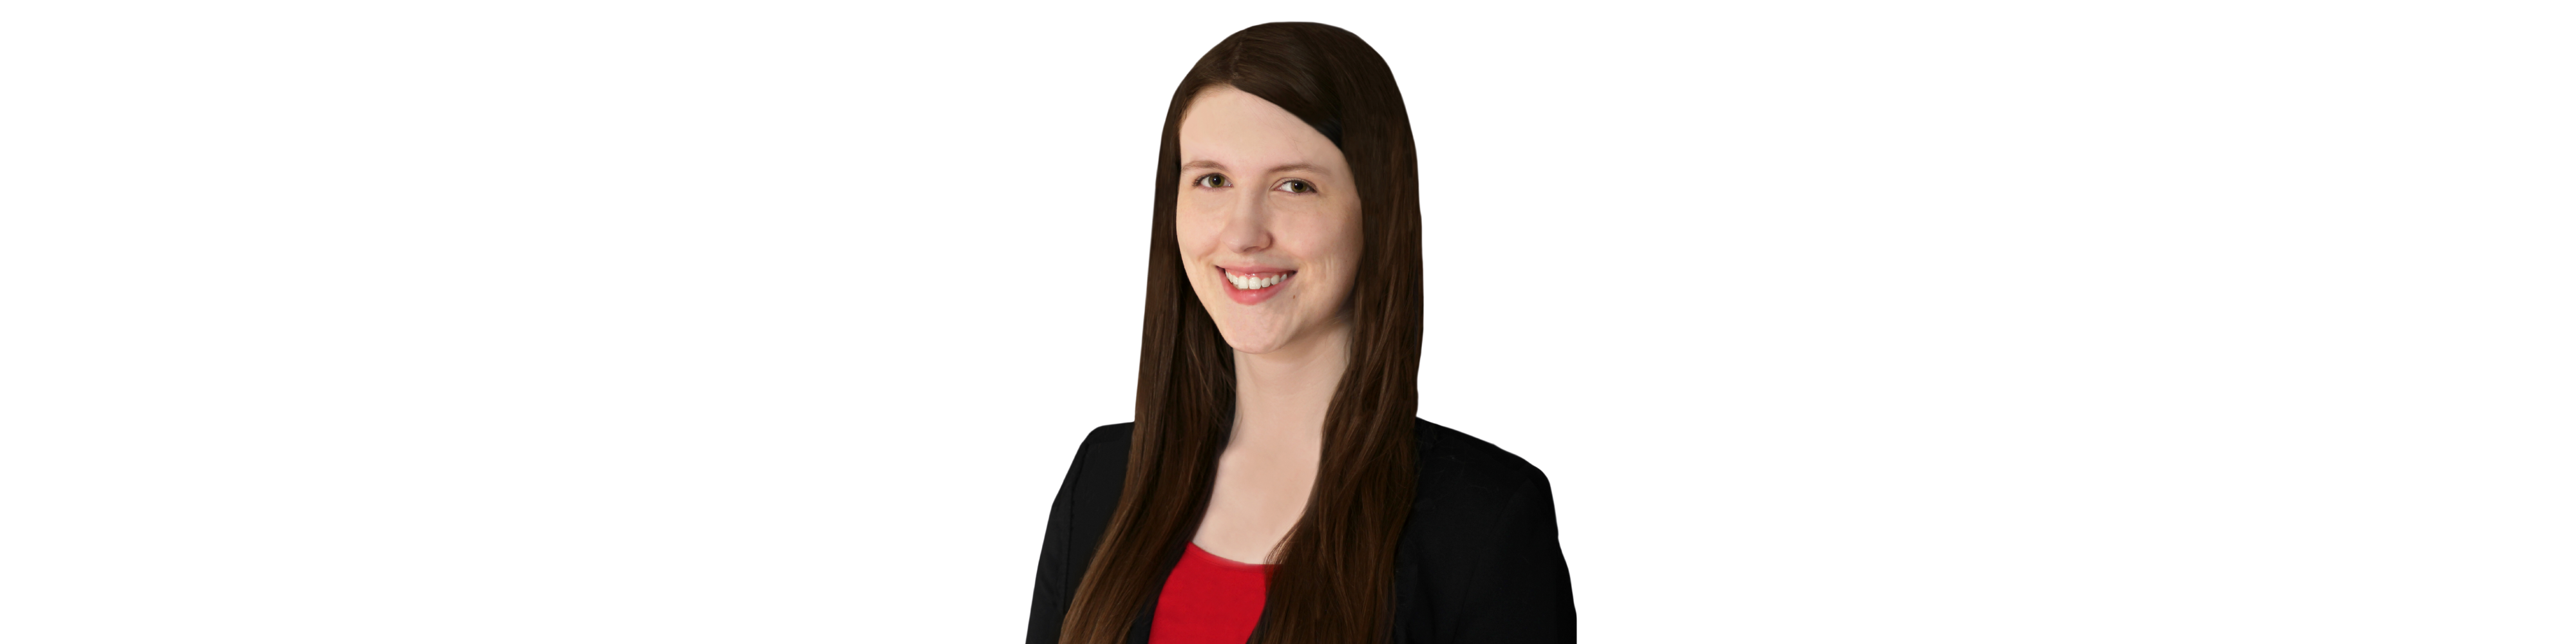 Headshot photo of Angela Dittrich on white background